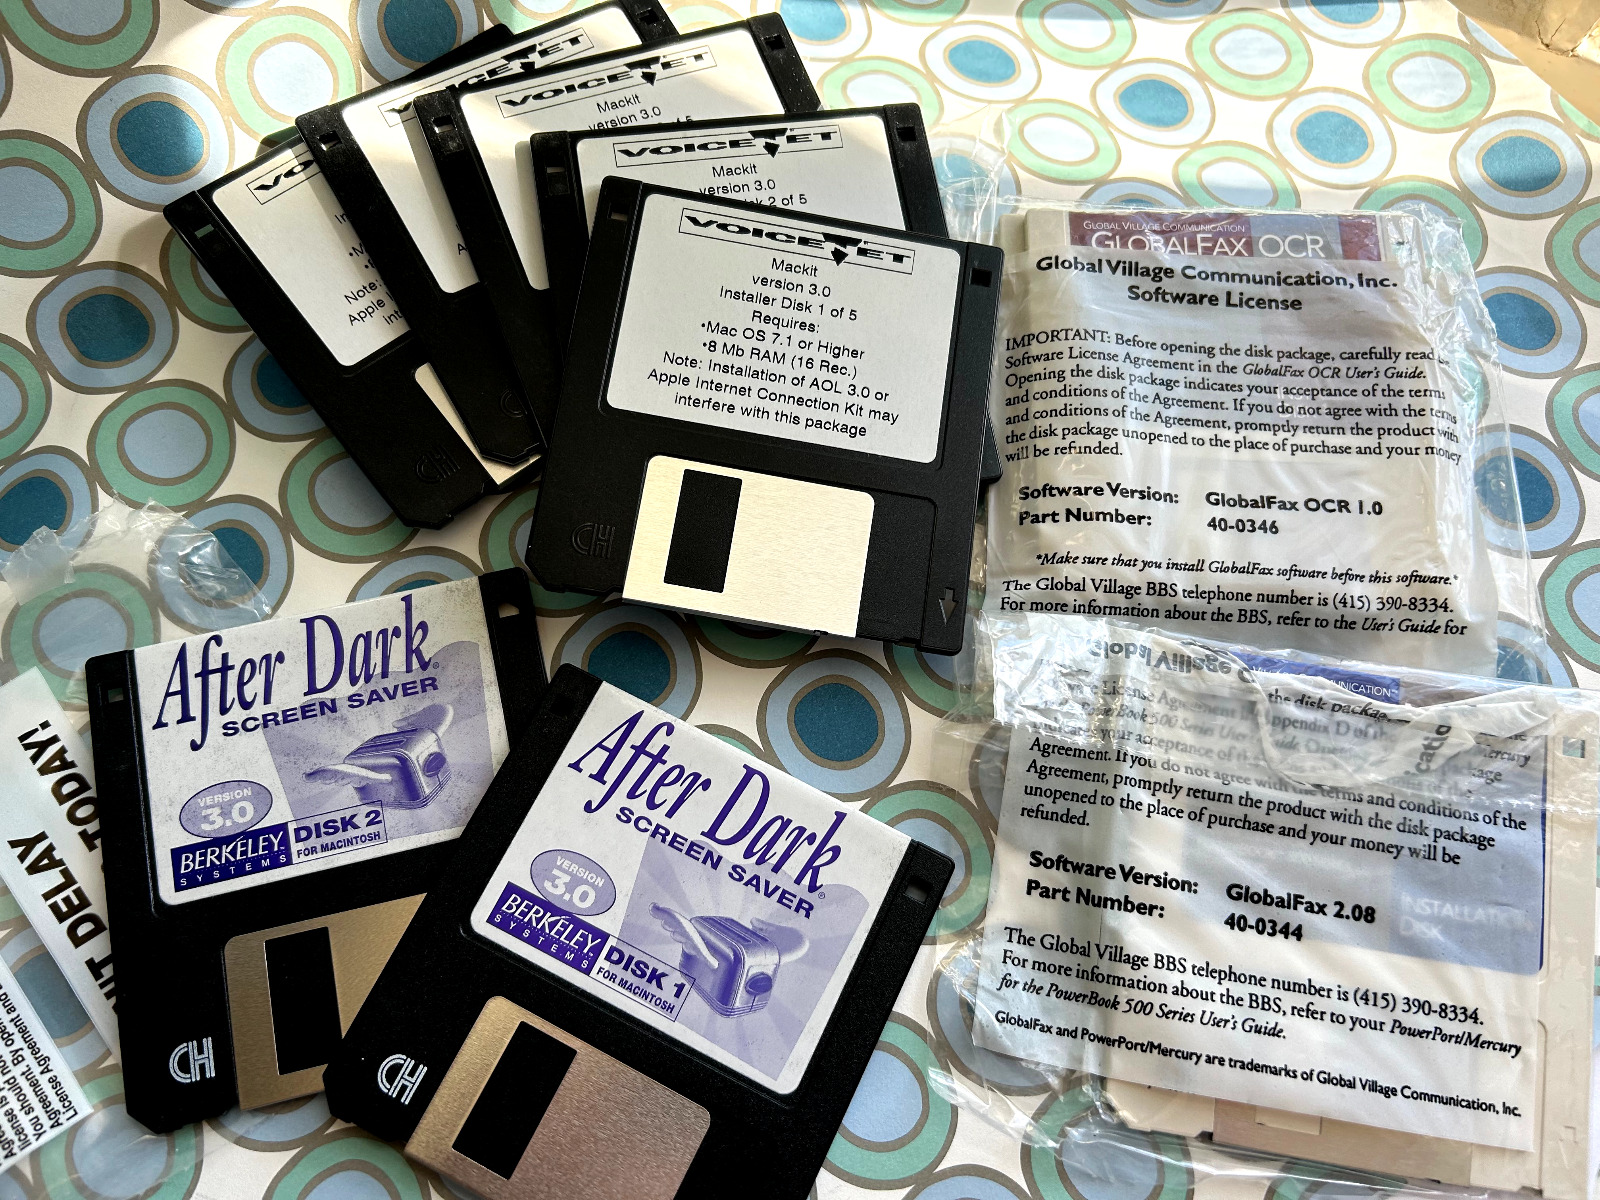 vtg 1990 1994 After Dark Screensaver FLOPPY DISK LOT software Macintosh Mac 3.0